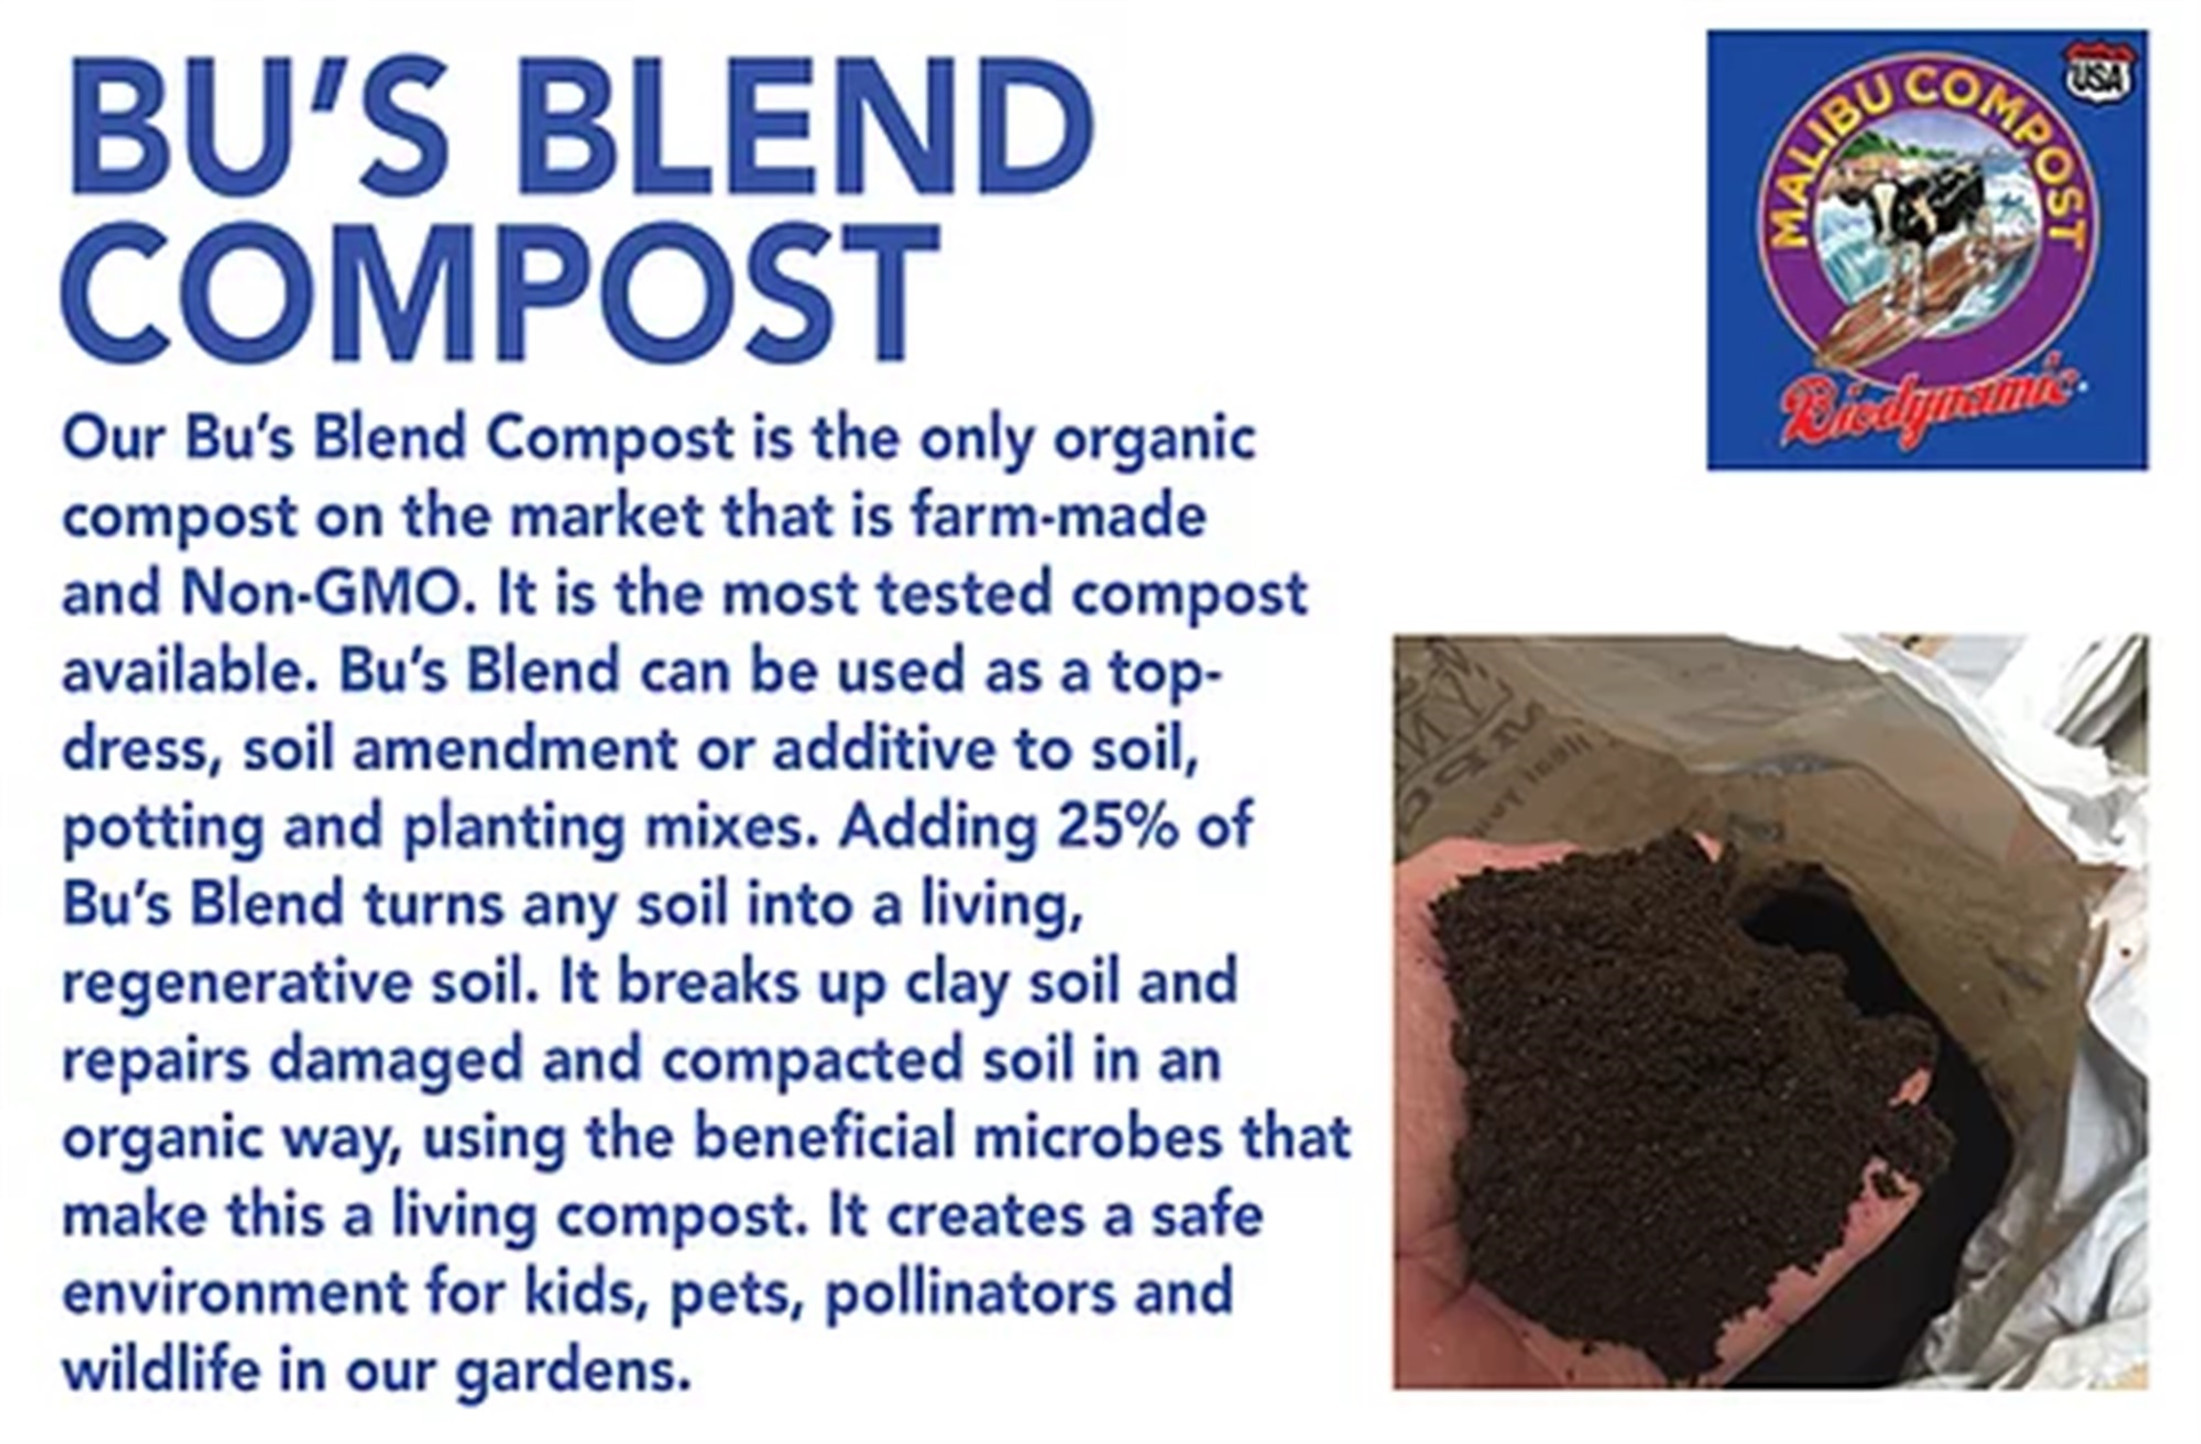 Malibu Compost Bu’s Blend Biodynamic Compost, 12 qt